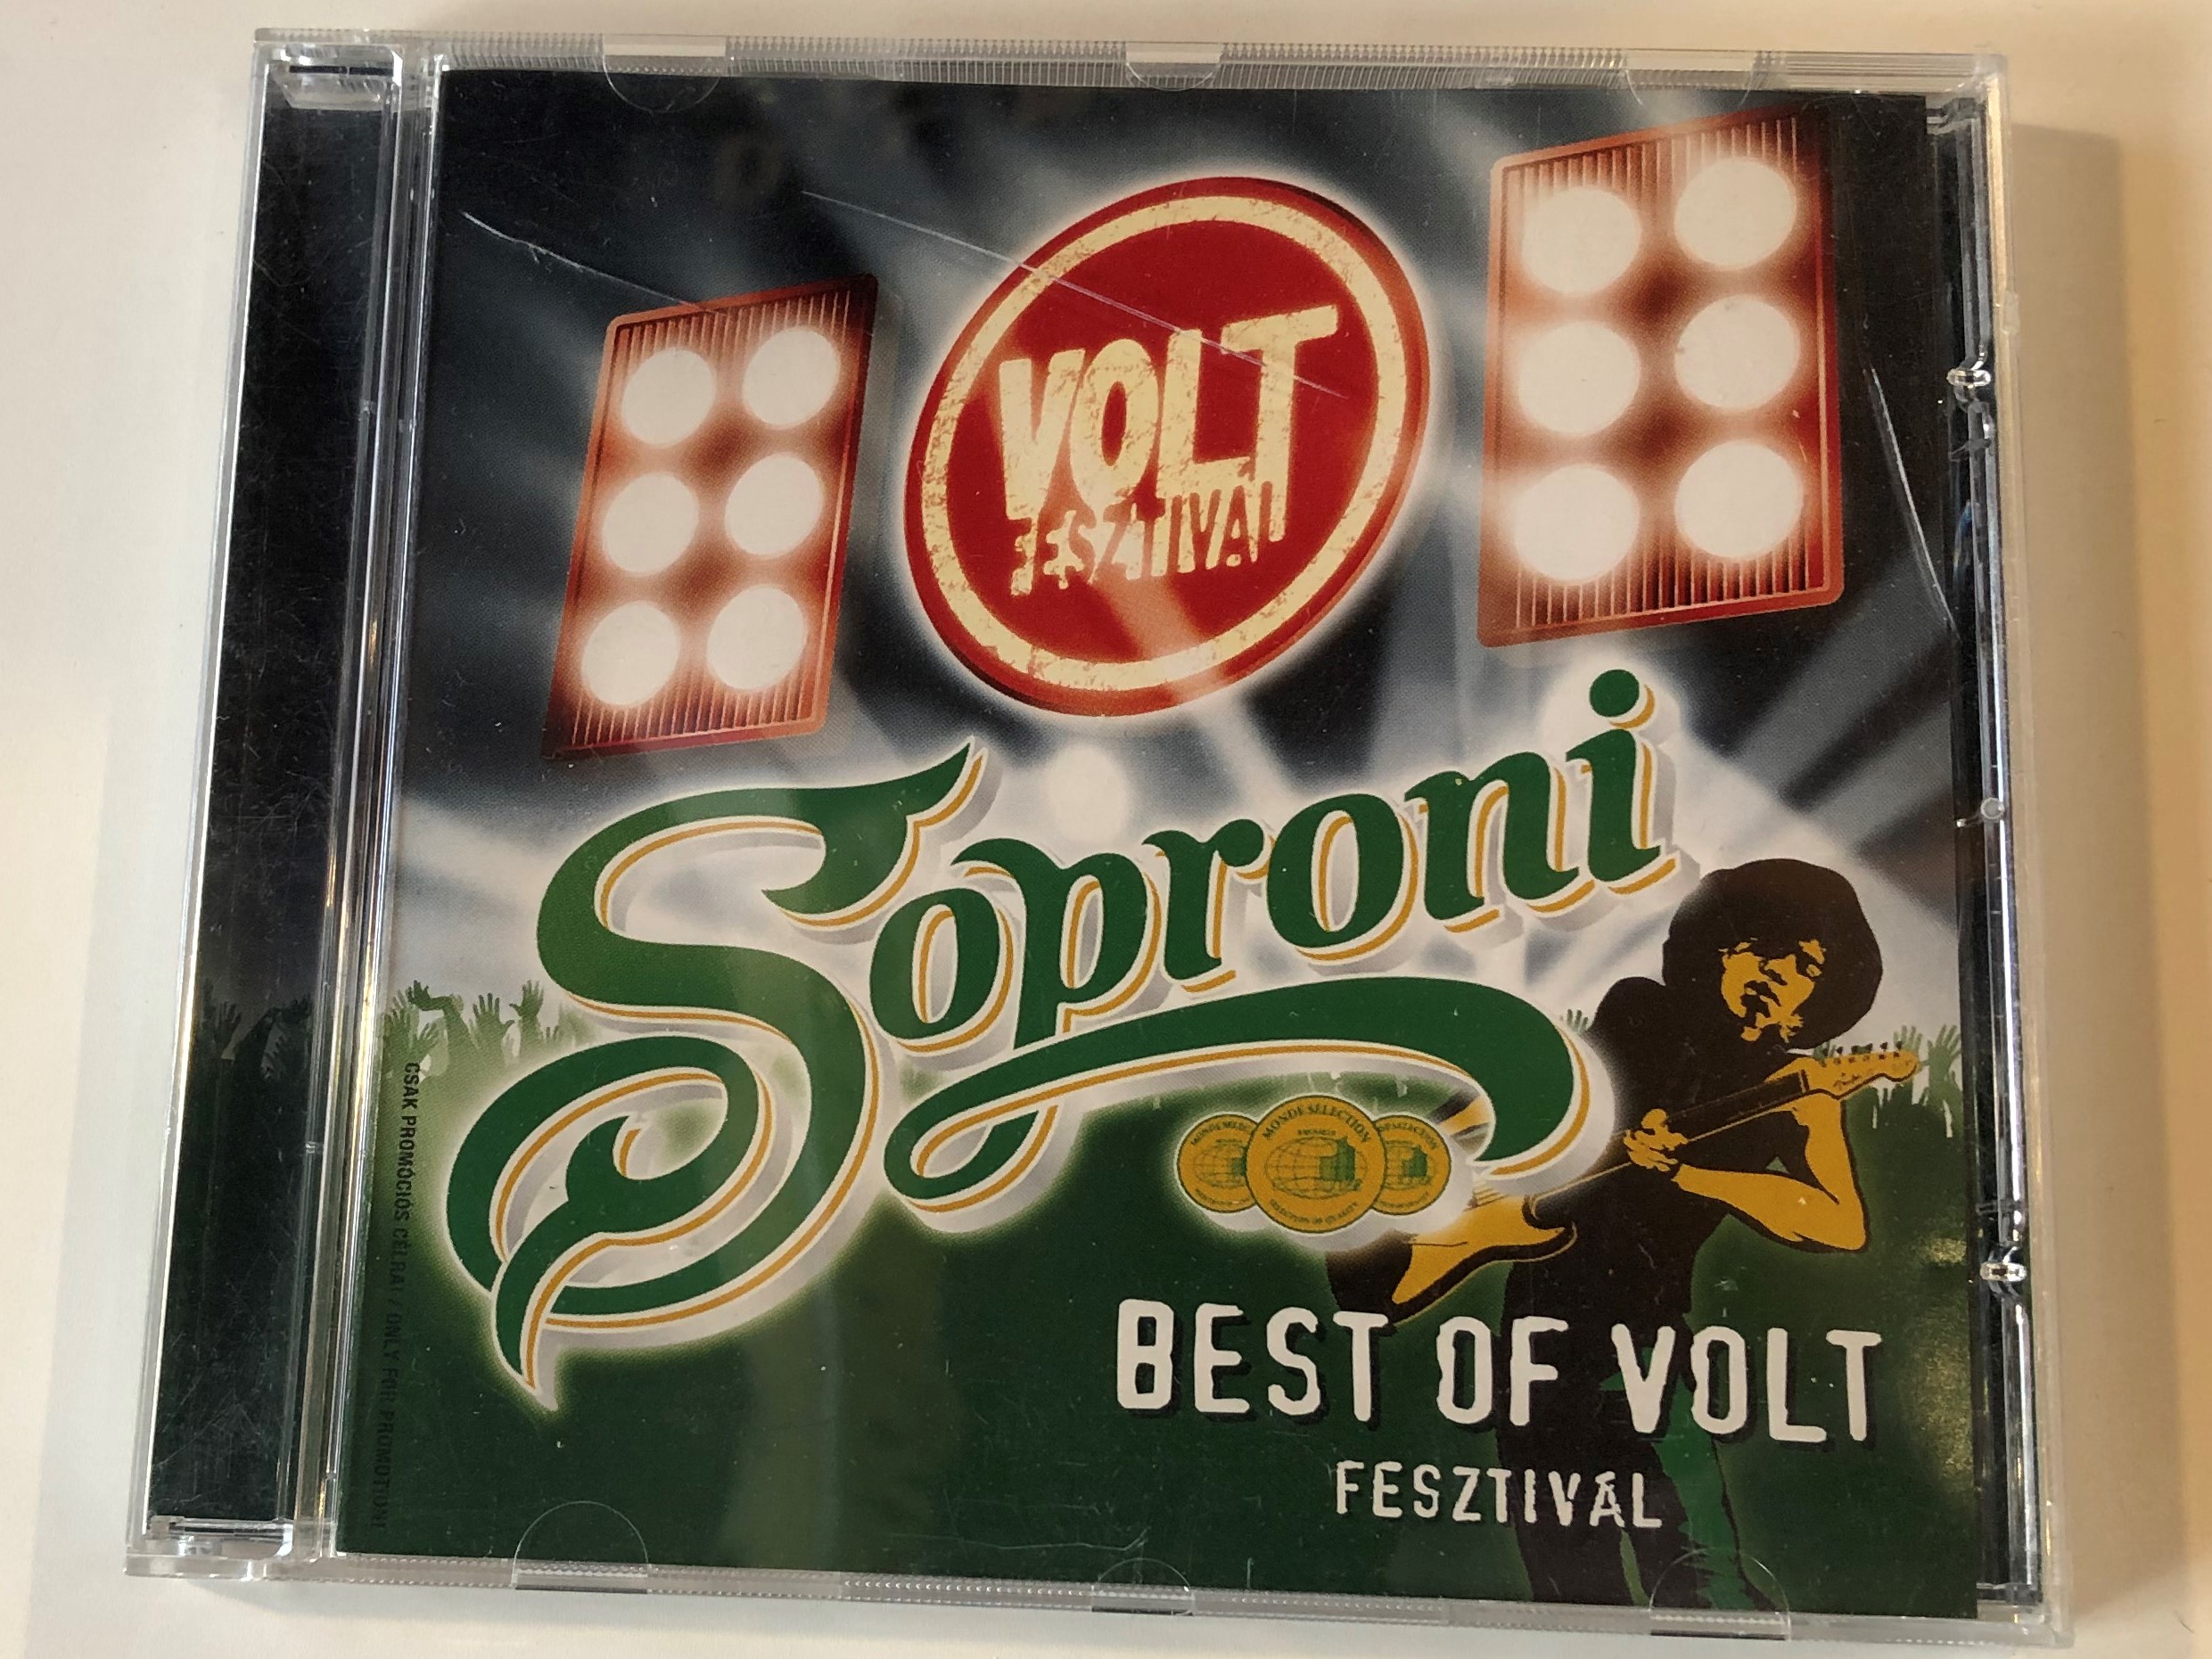 volt-fesztival-soproni-best-of-volt-fesztival-magneoton-audio-cd-2006-5051011451423-1-.jpg